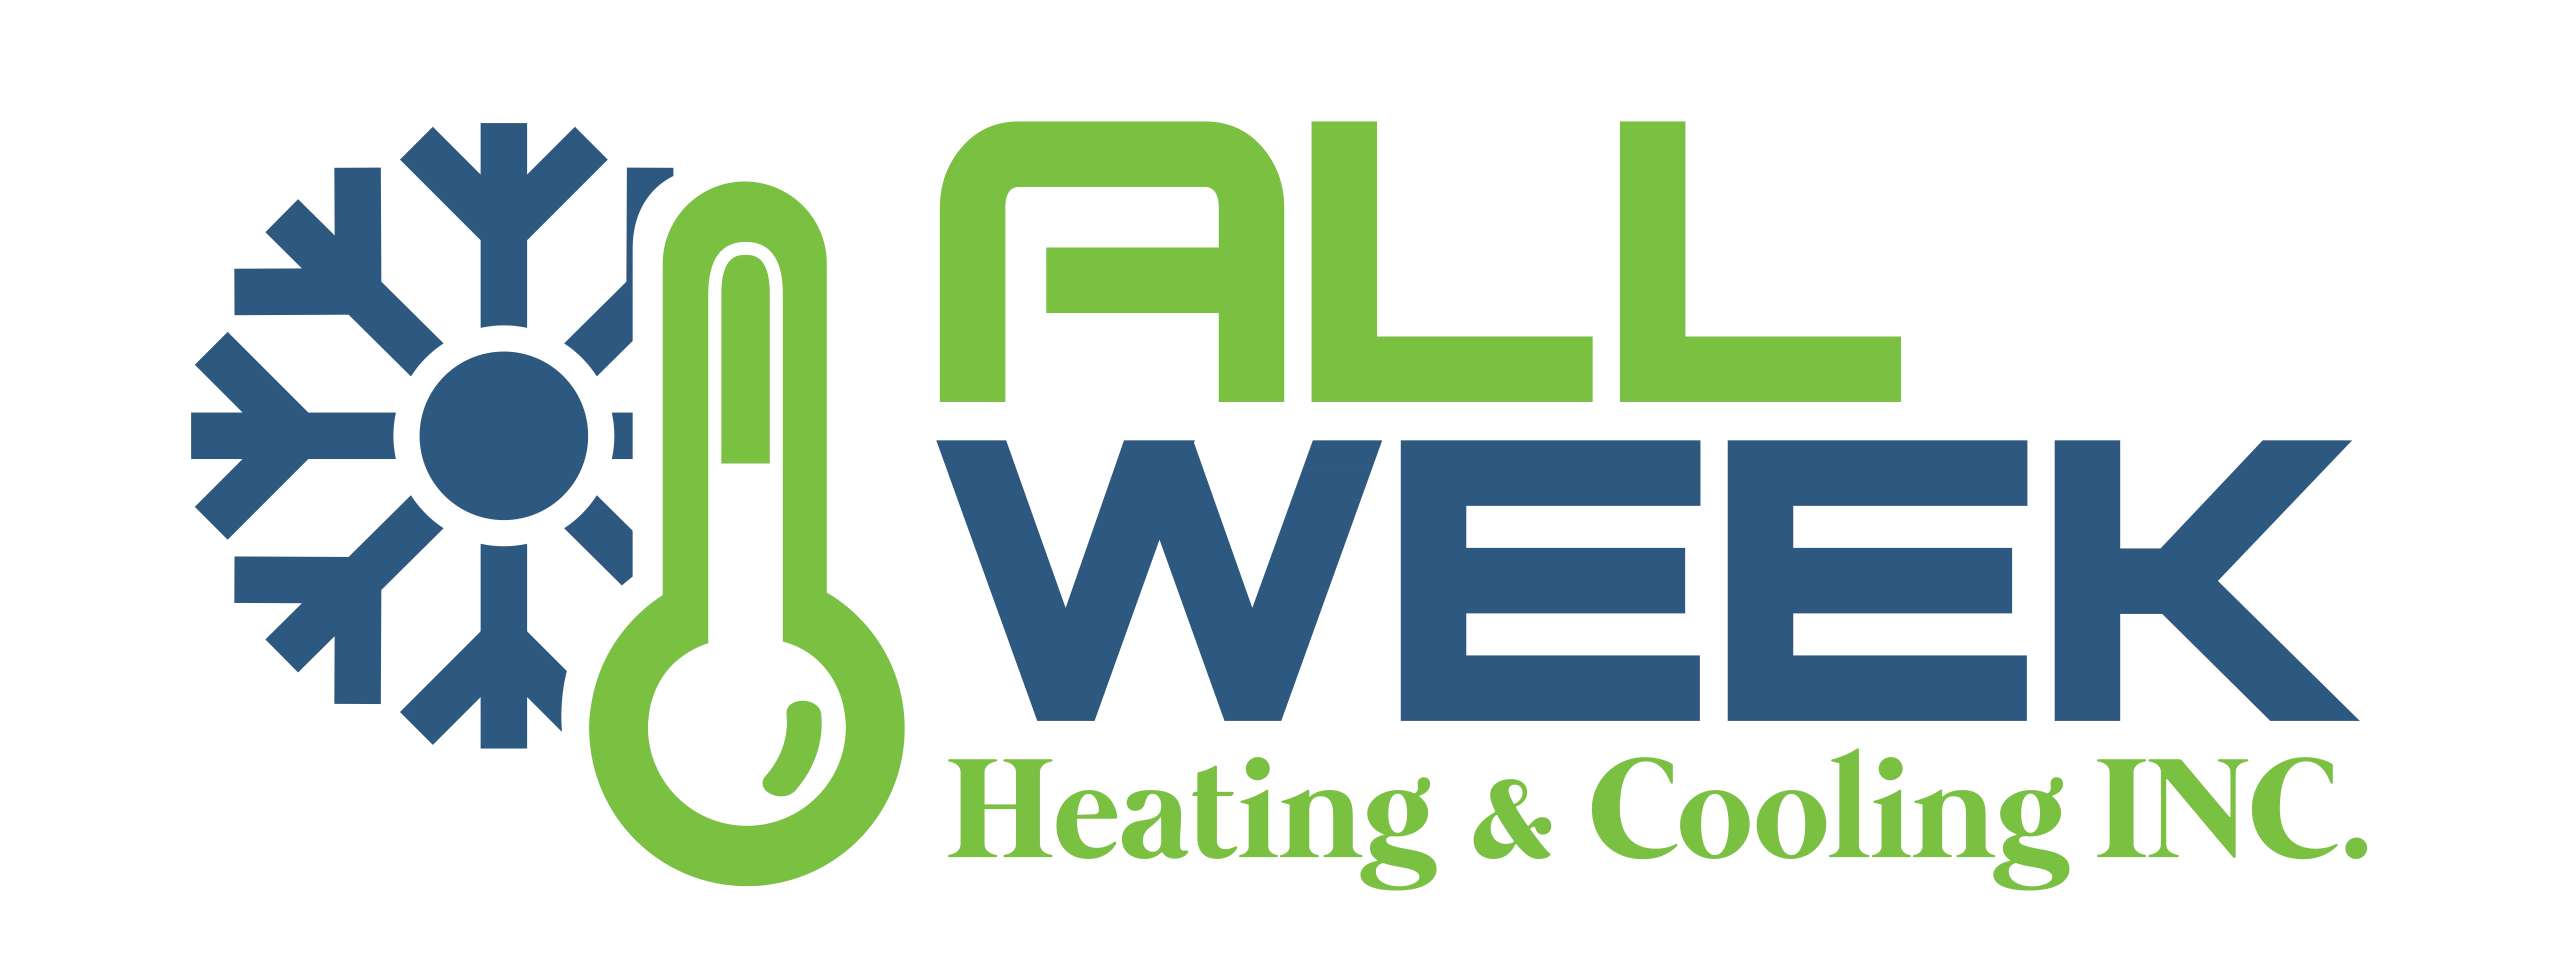 All Week Heating & Cooling Inc Logo